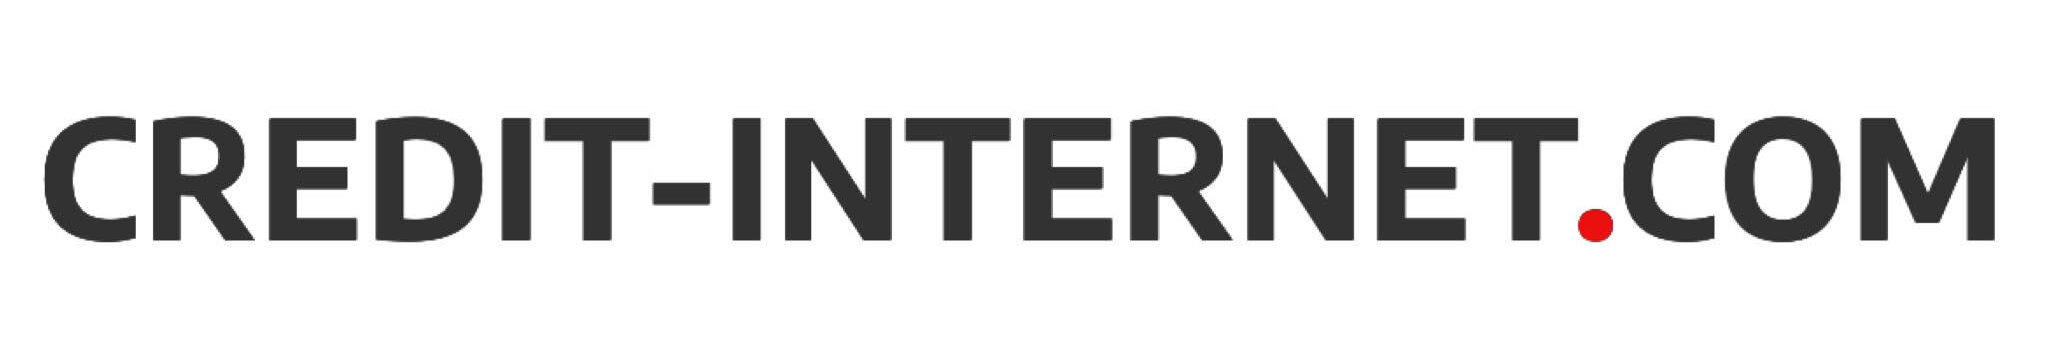 credit-internet.com, le crédit internet, logo